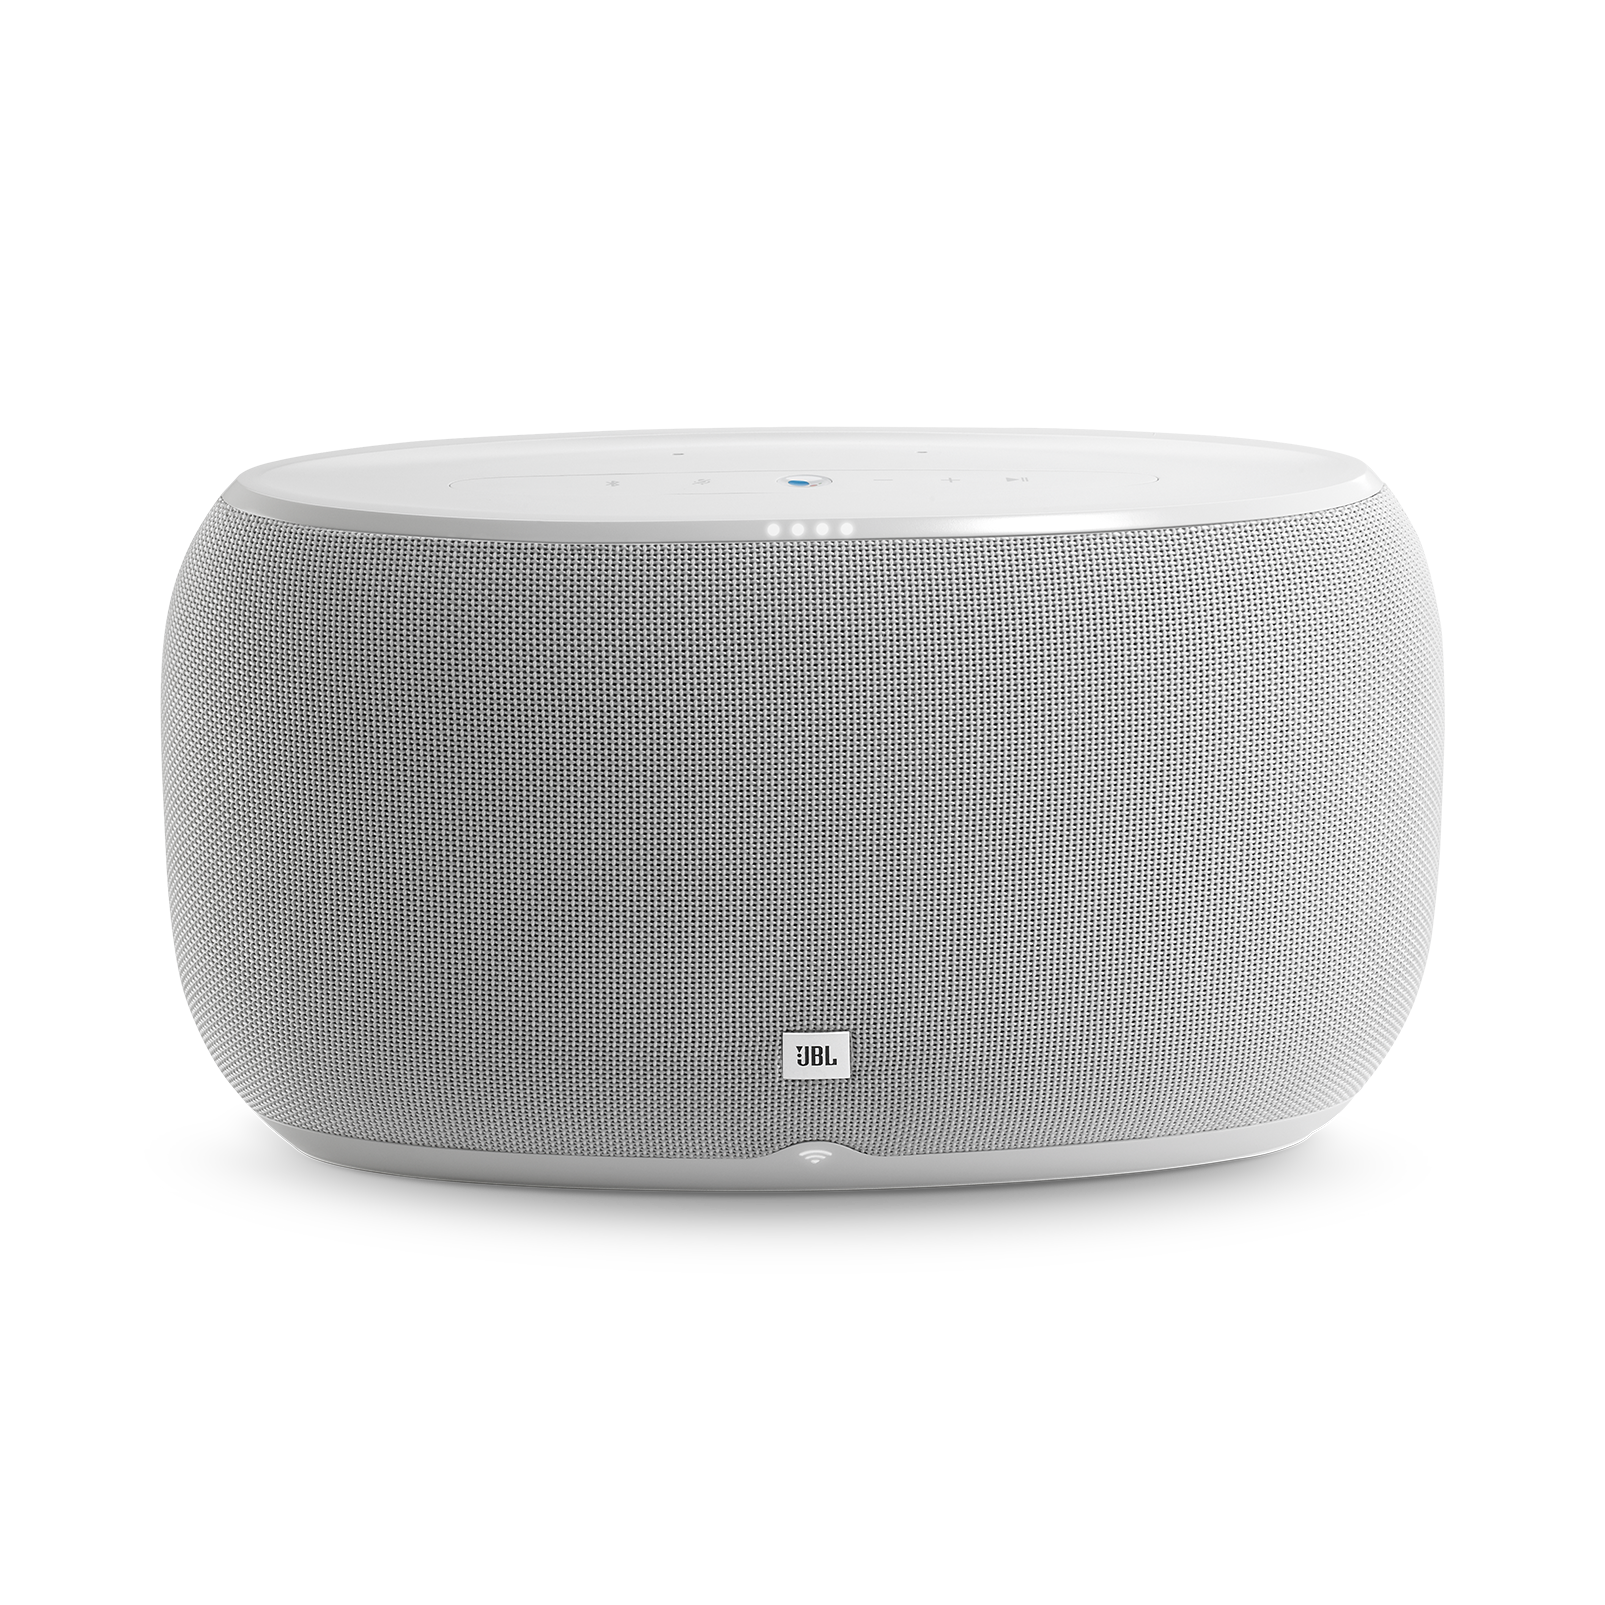 JBLLINK500WHTUK, voice-activated speaker, blanc